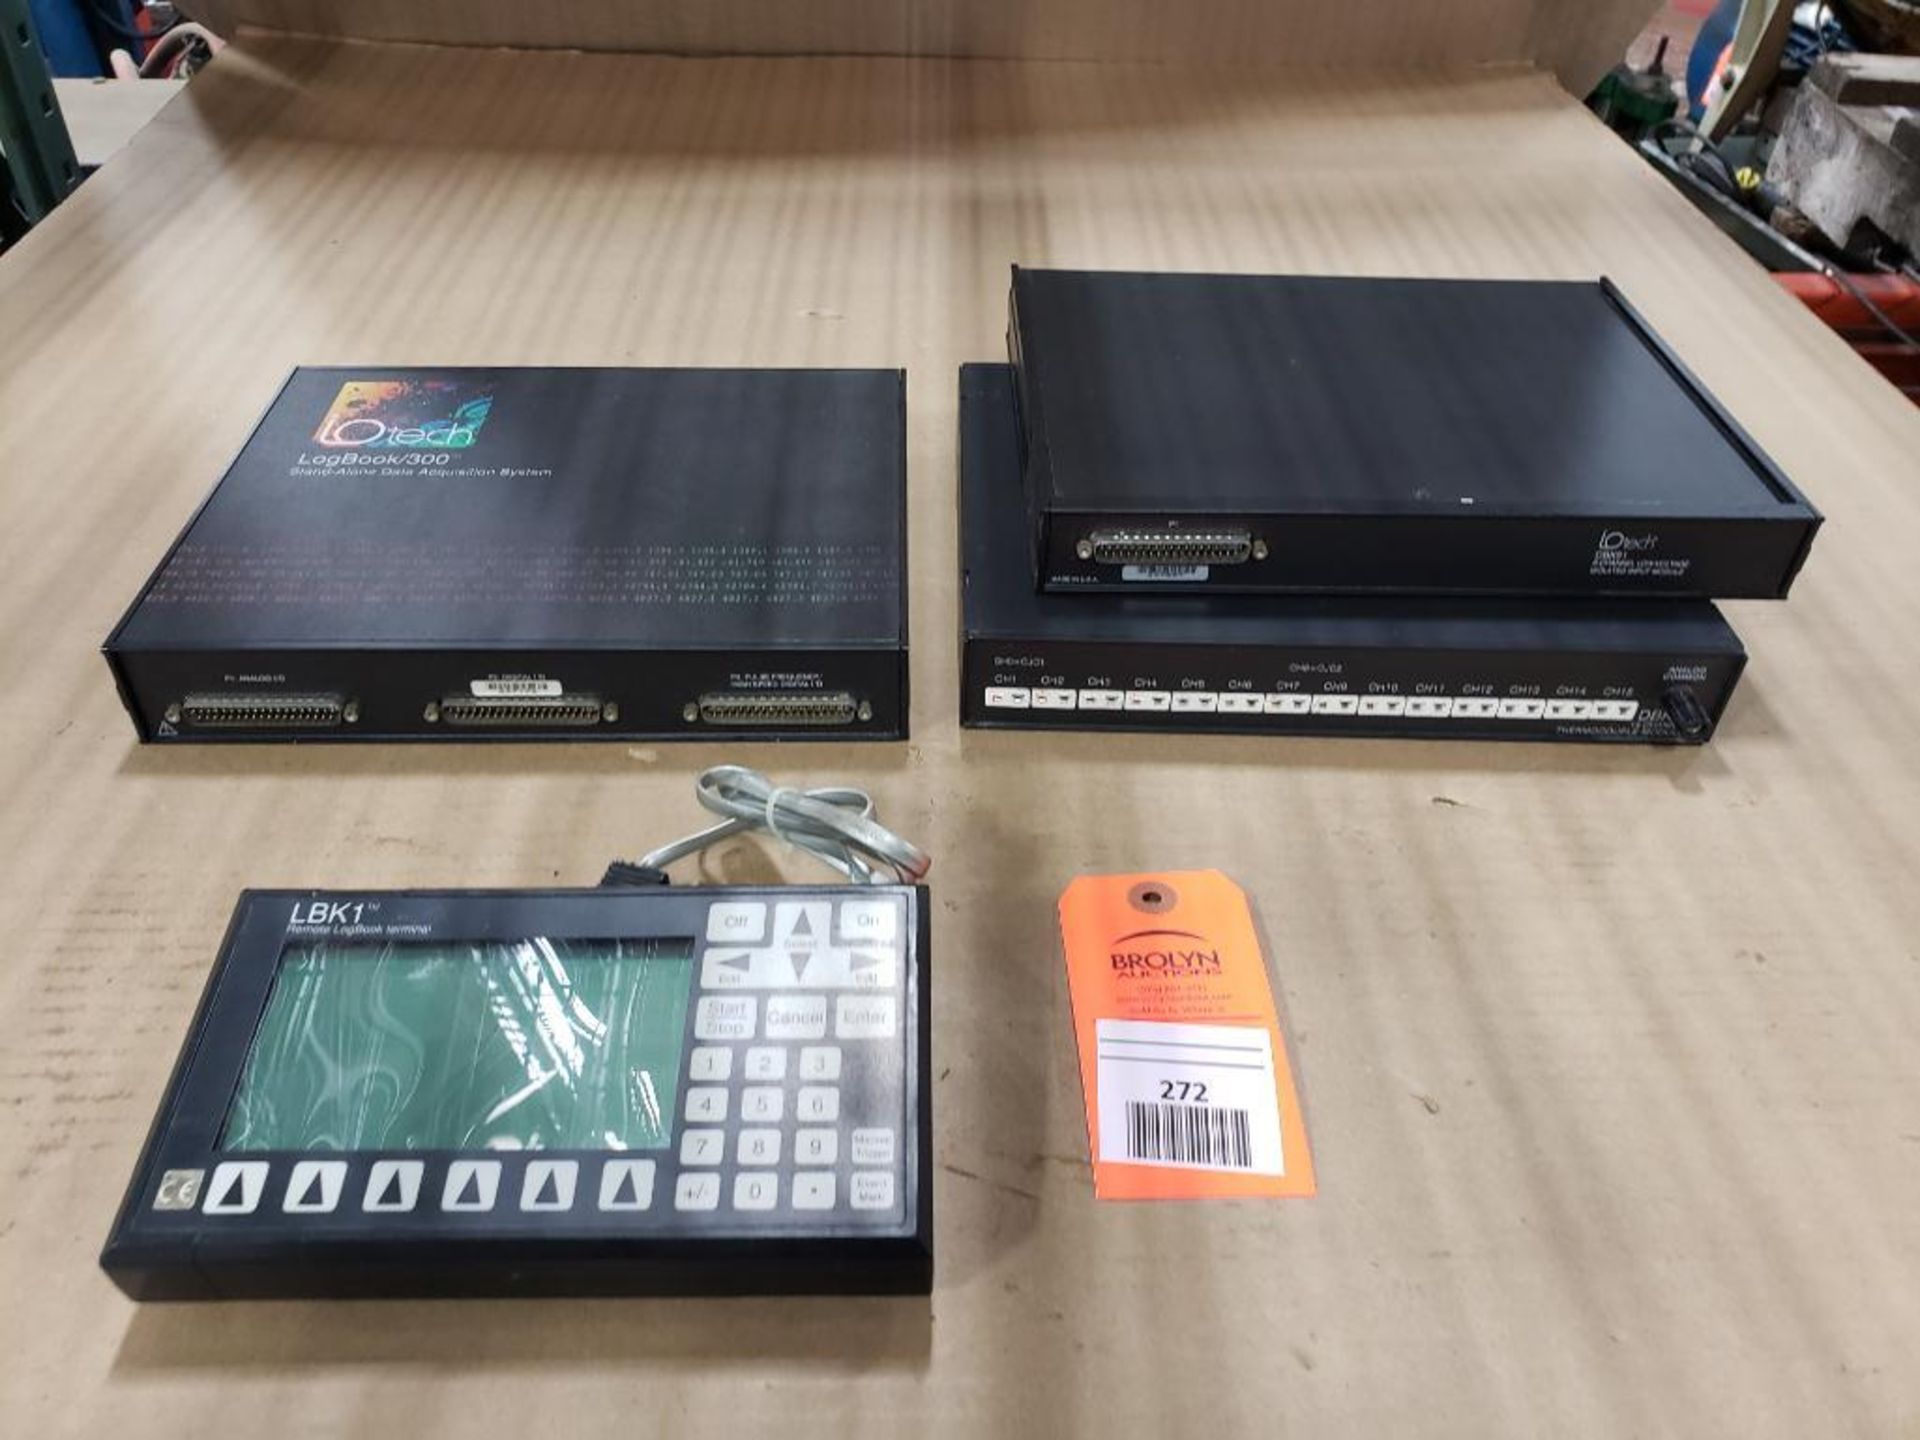 IOTech DAQ system equipment. LogBook/300, LBK1 remote terminal, thermocouple module.